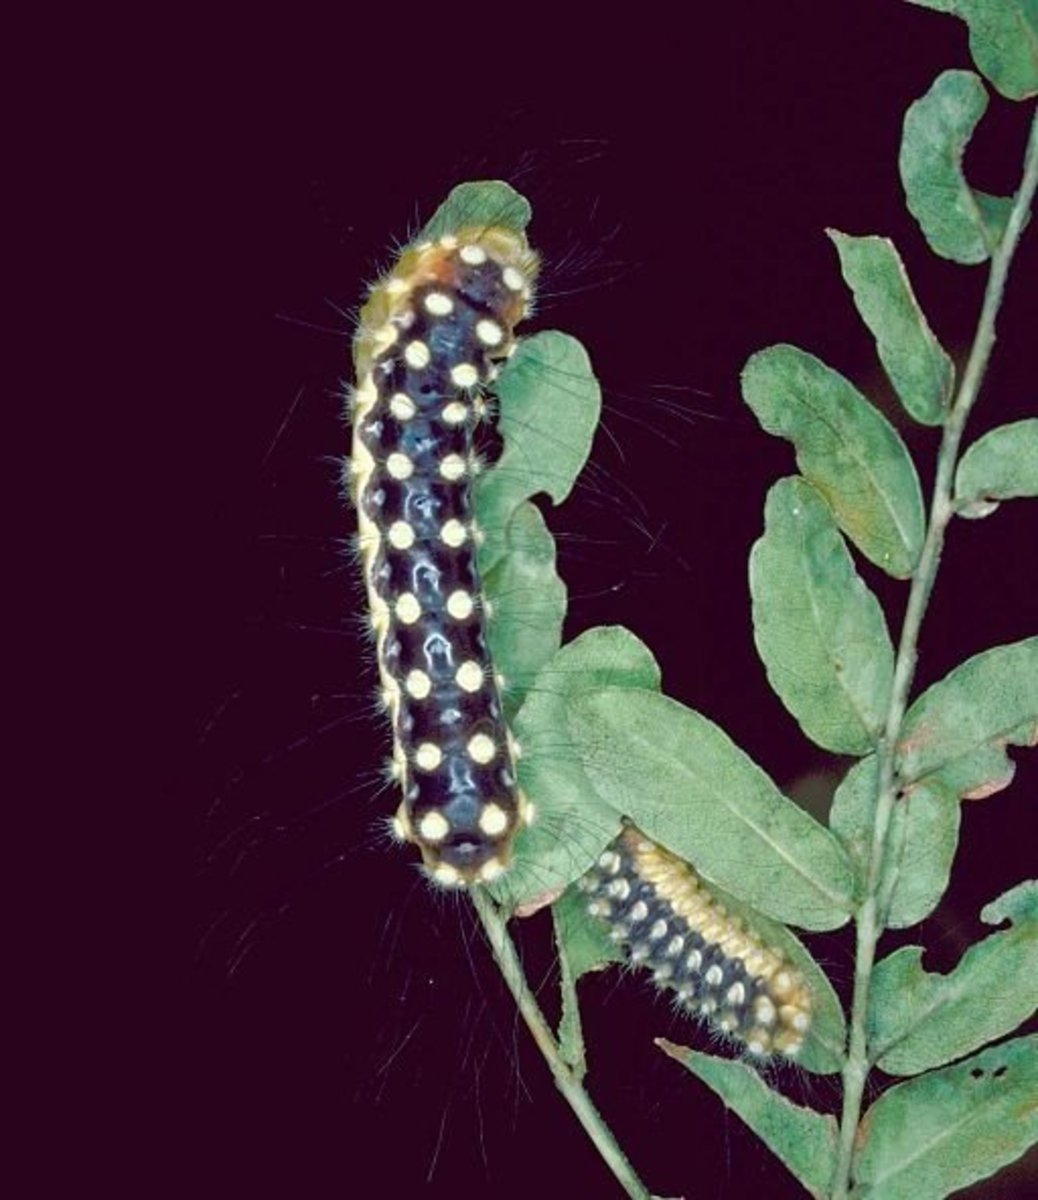 This caterpillar has inconspicuous stinging hairs.